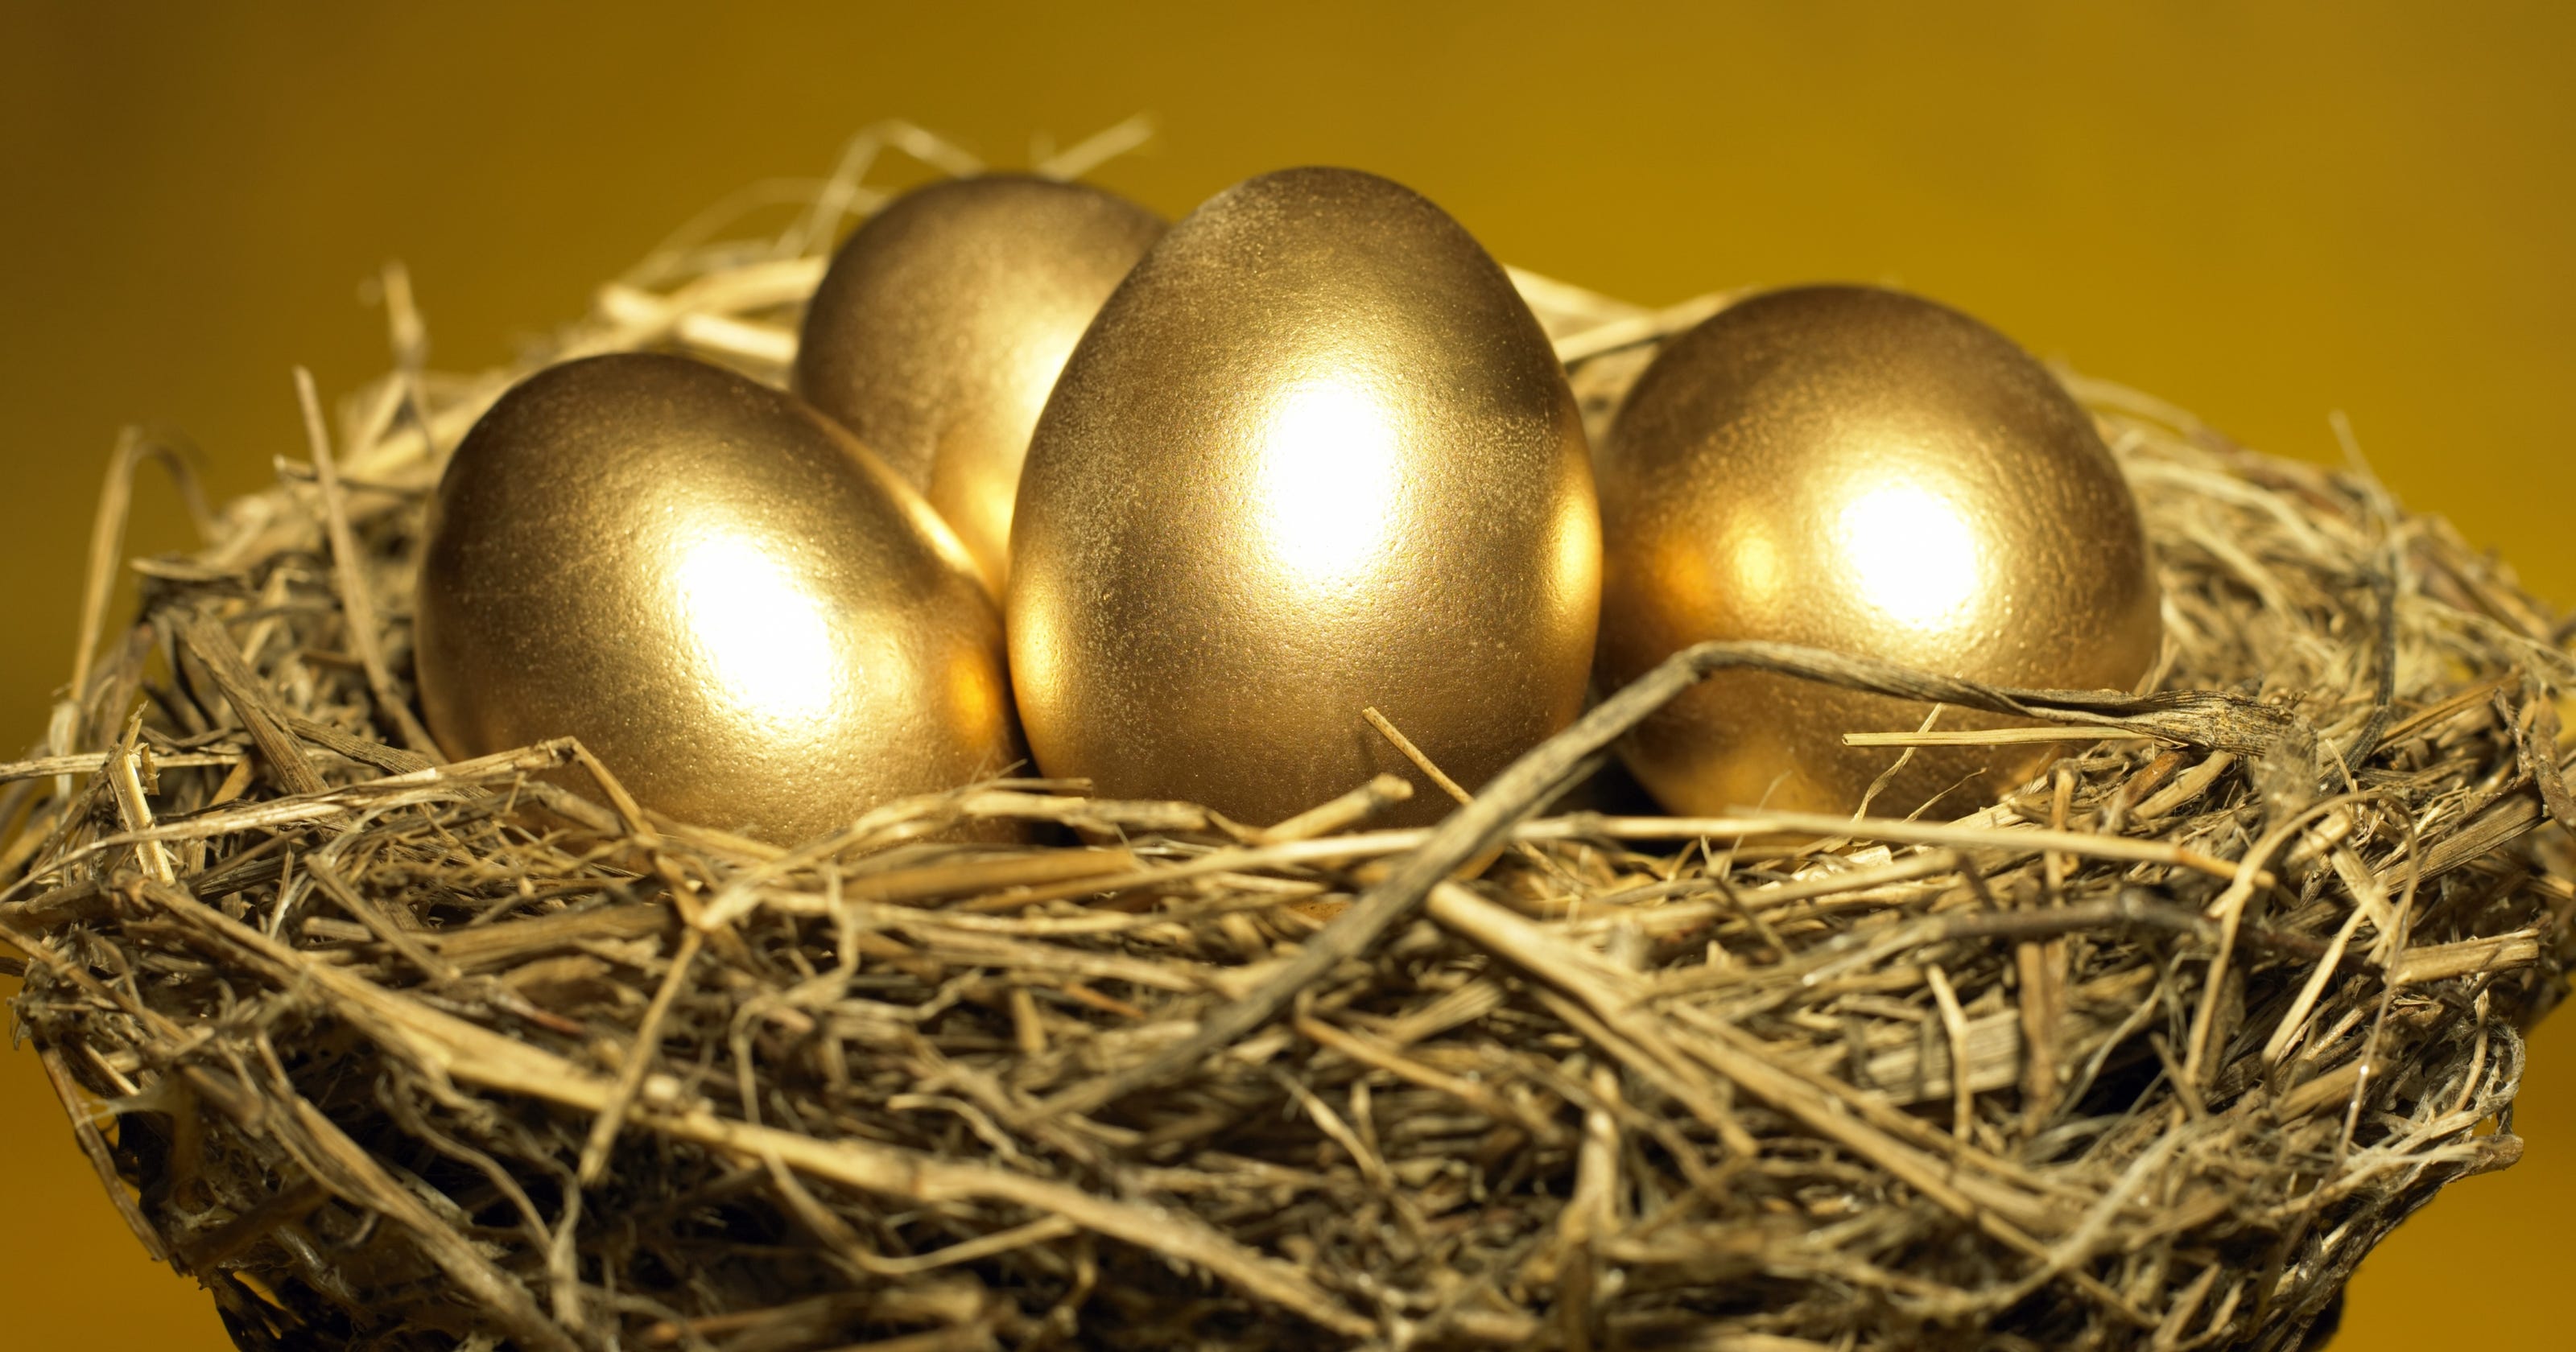 Money Watch: Making your retirement nest egg last